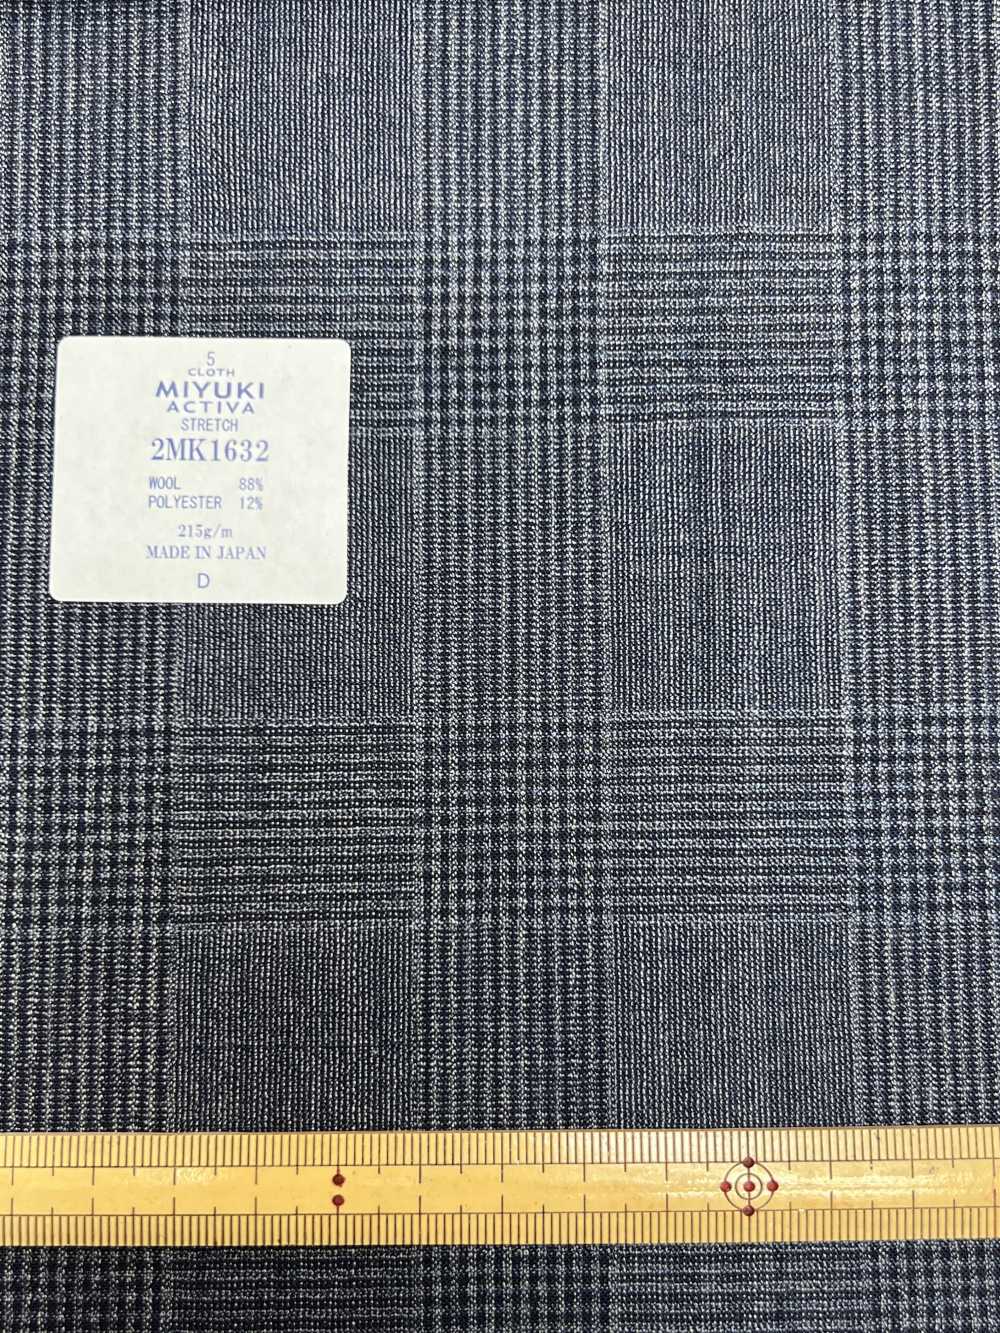 2MK1632 MIYUKI COMFORT ACTIVA STRETCH Mittelblau[Textil] Miyuki-Keori (Miyuki)